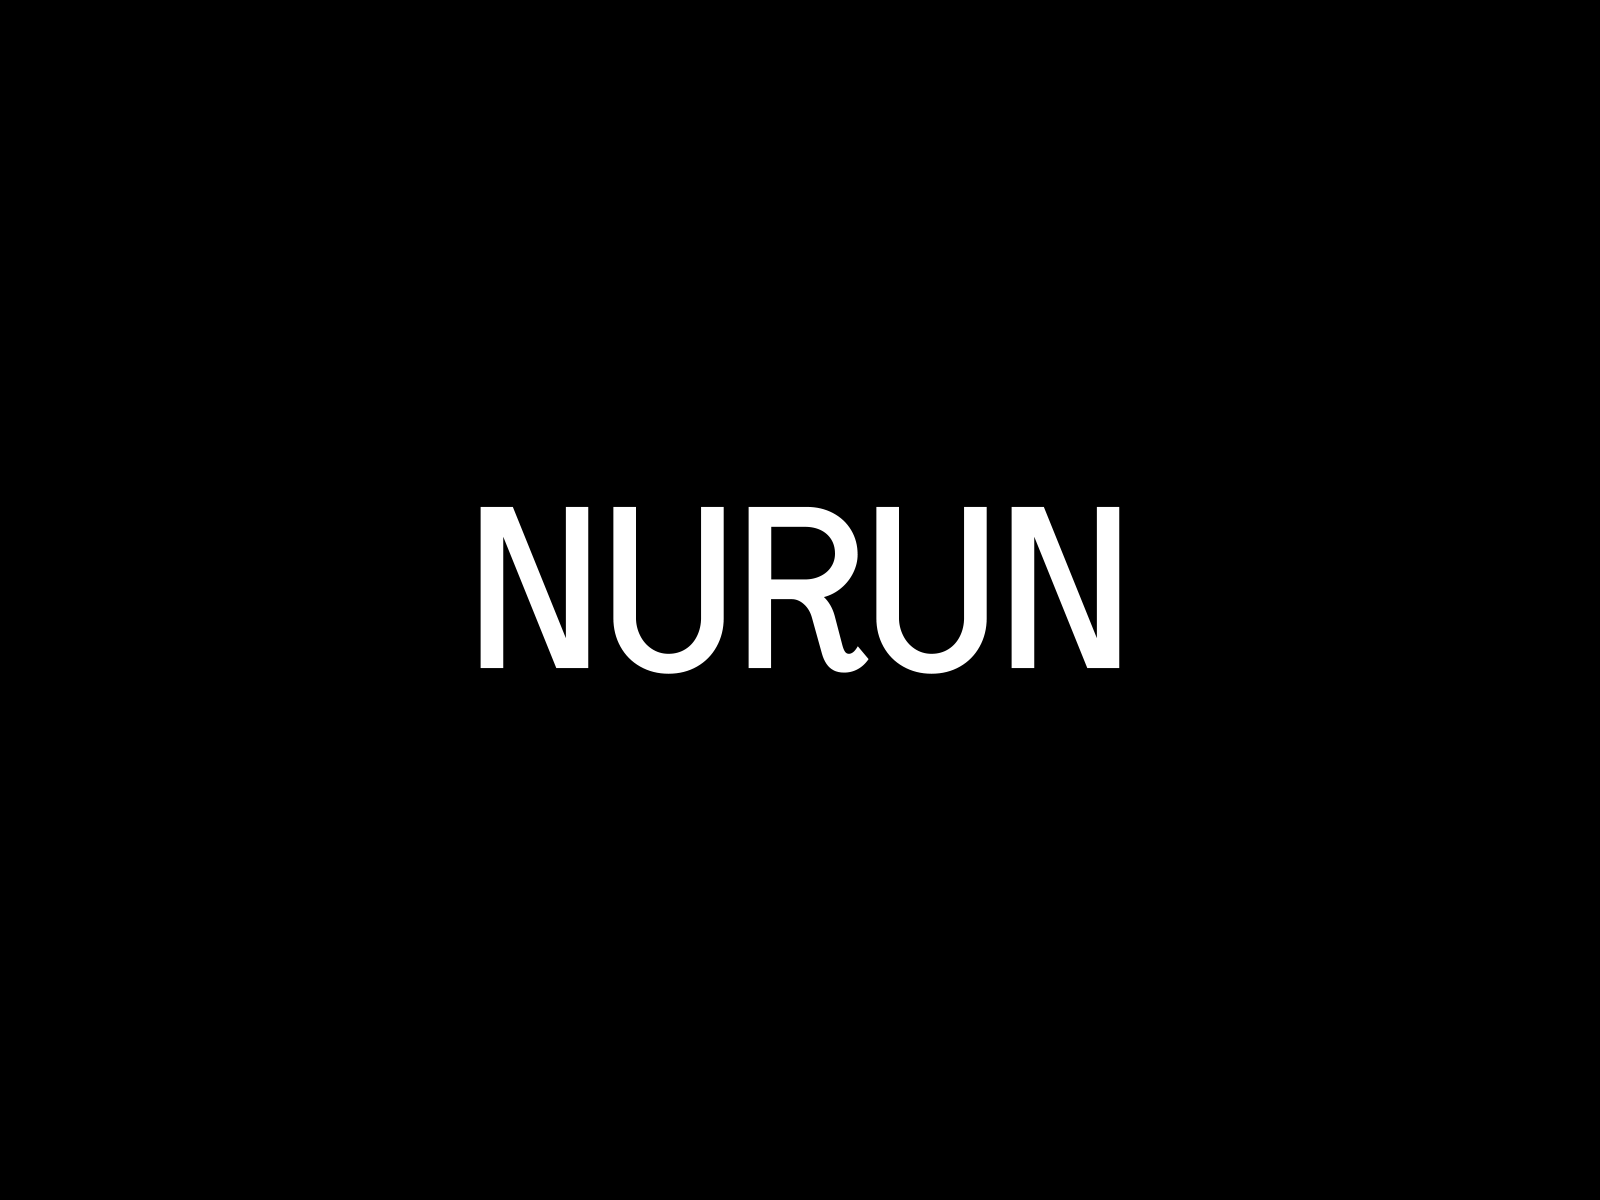 Nurun - morphing logo animation exploration by Riham on Dribbble